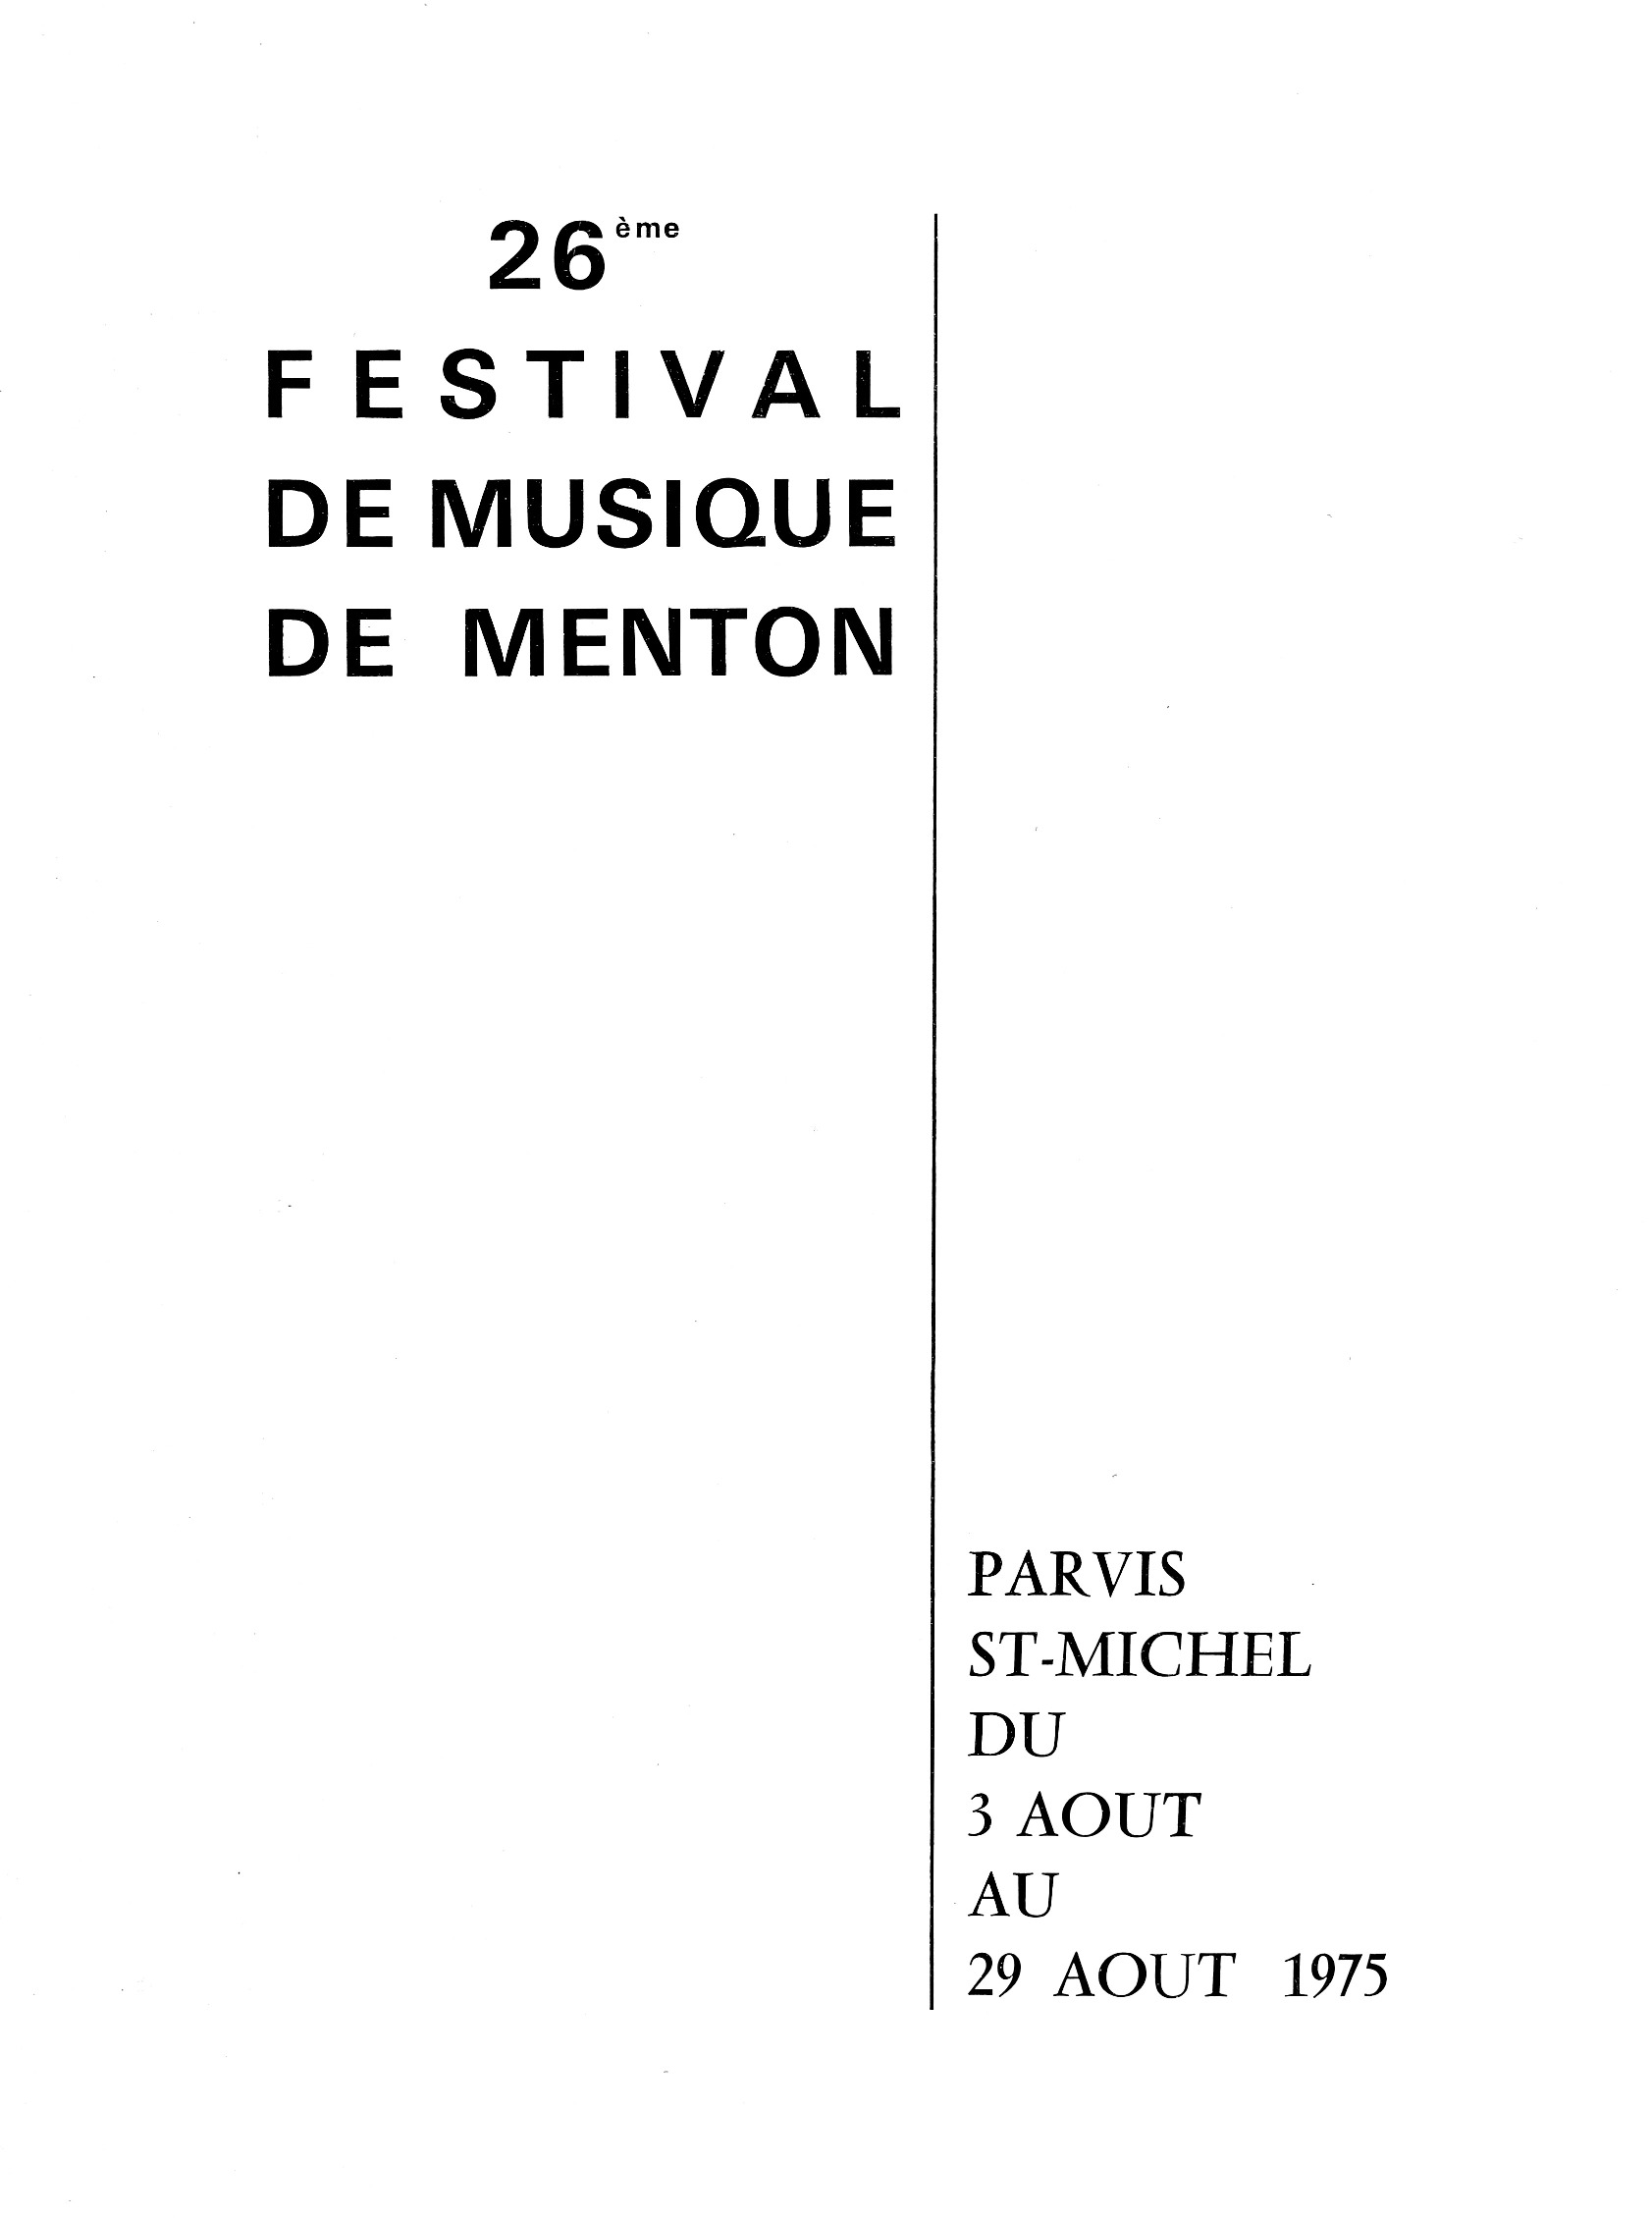 Festival de musique de Menton 1975